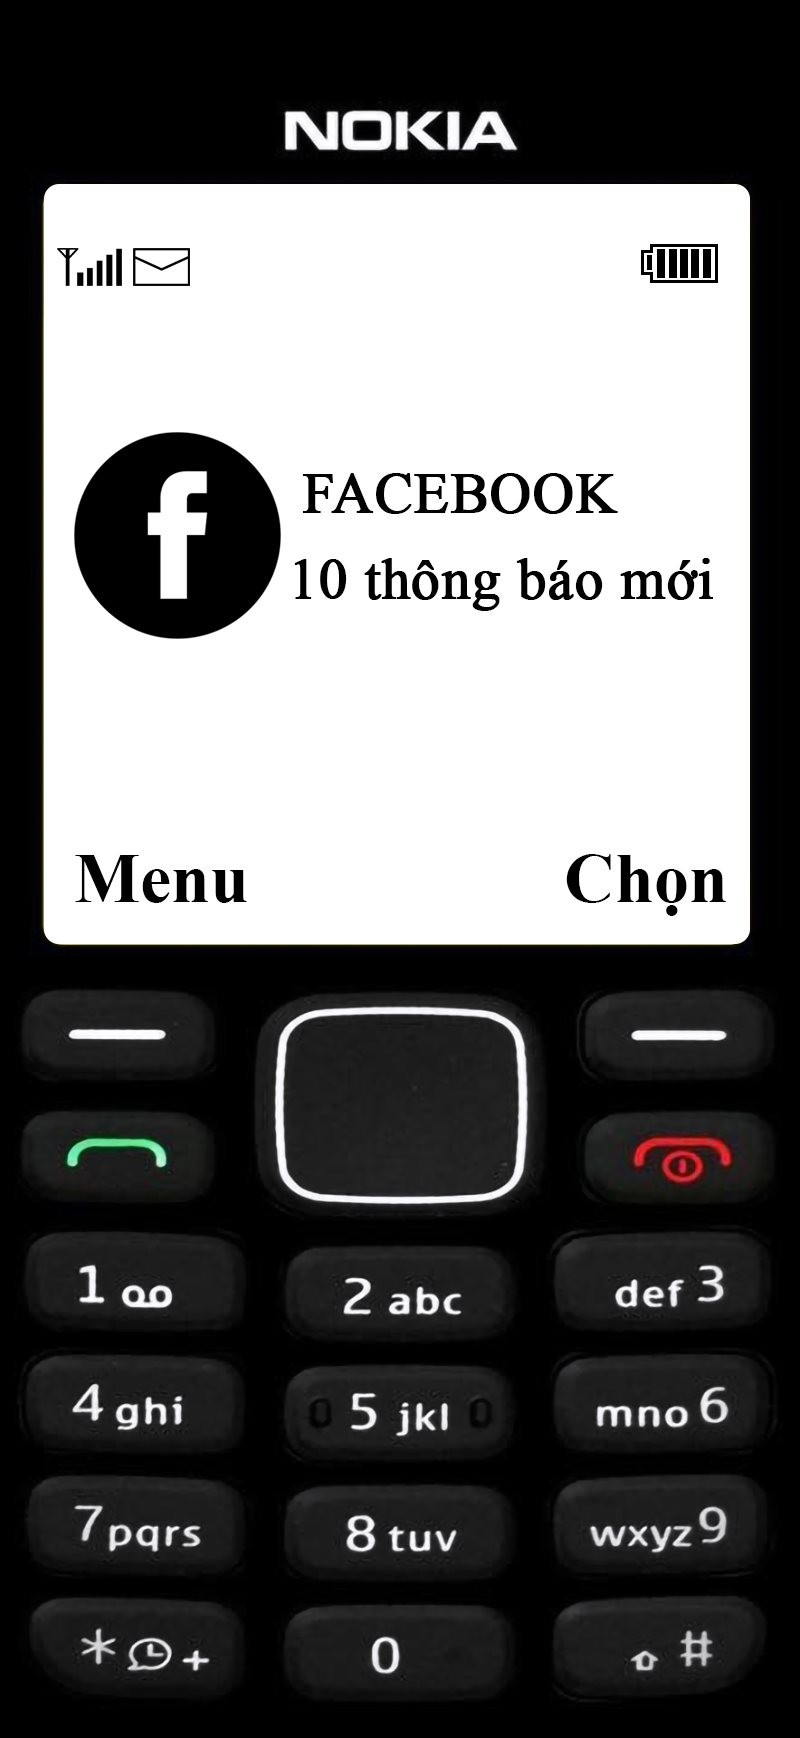 Tong hop hinh nen “cai trang” smartphone thanh Nokia 1280-Hinh-7